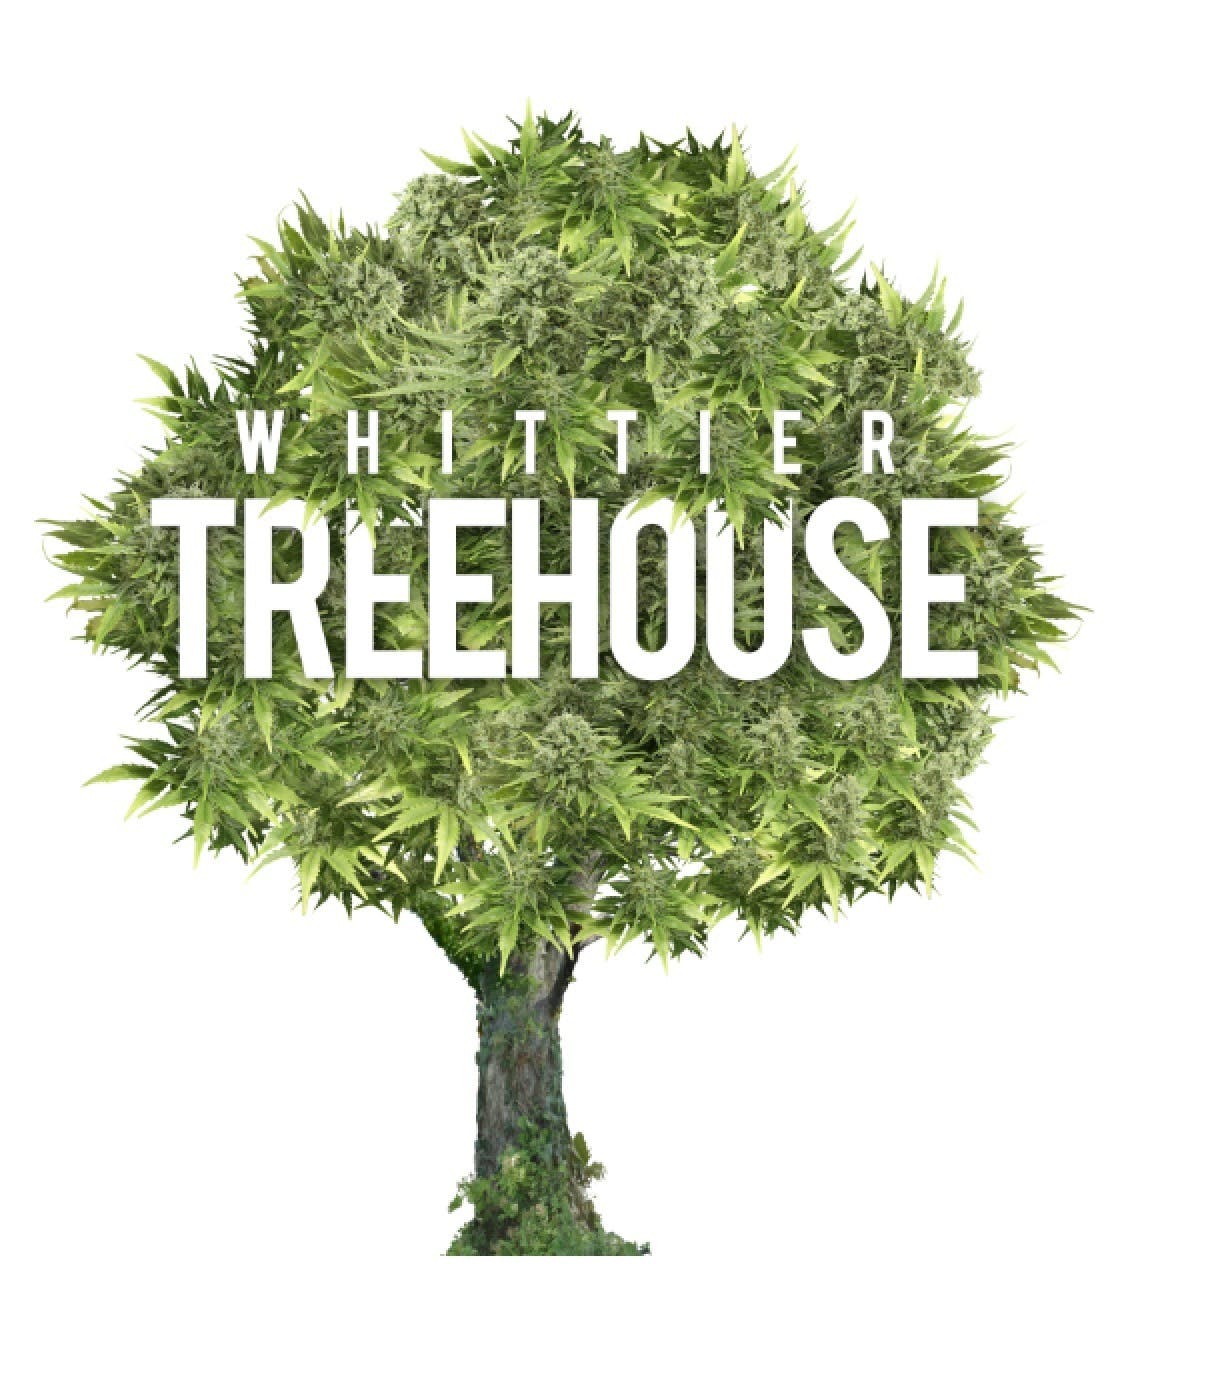 Whittier Treehouse - Medical Marijuana Doctors - Cannabizme.com